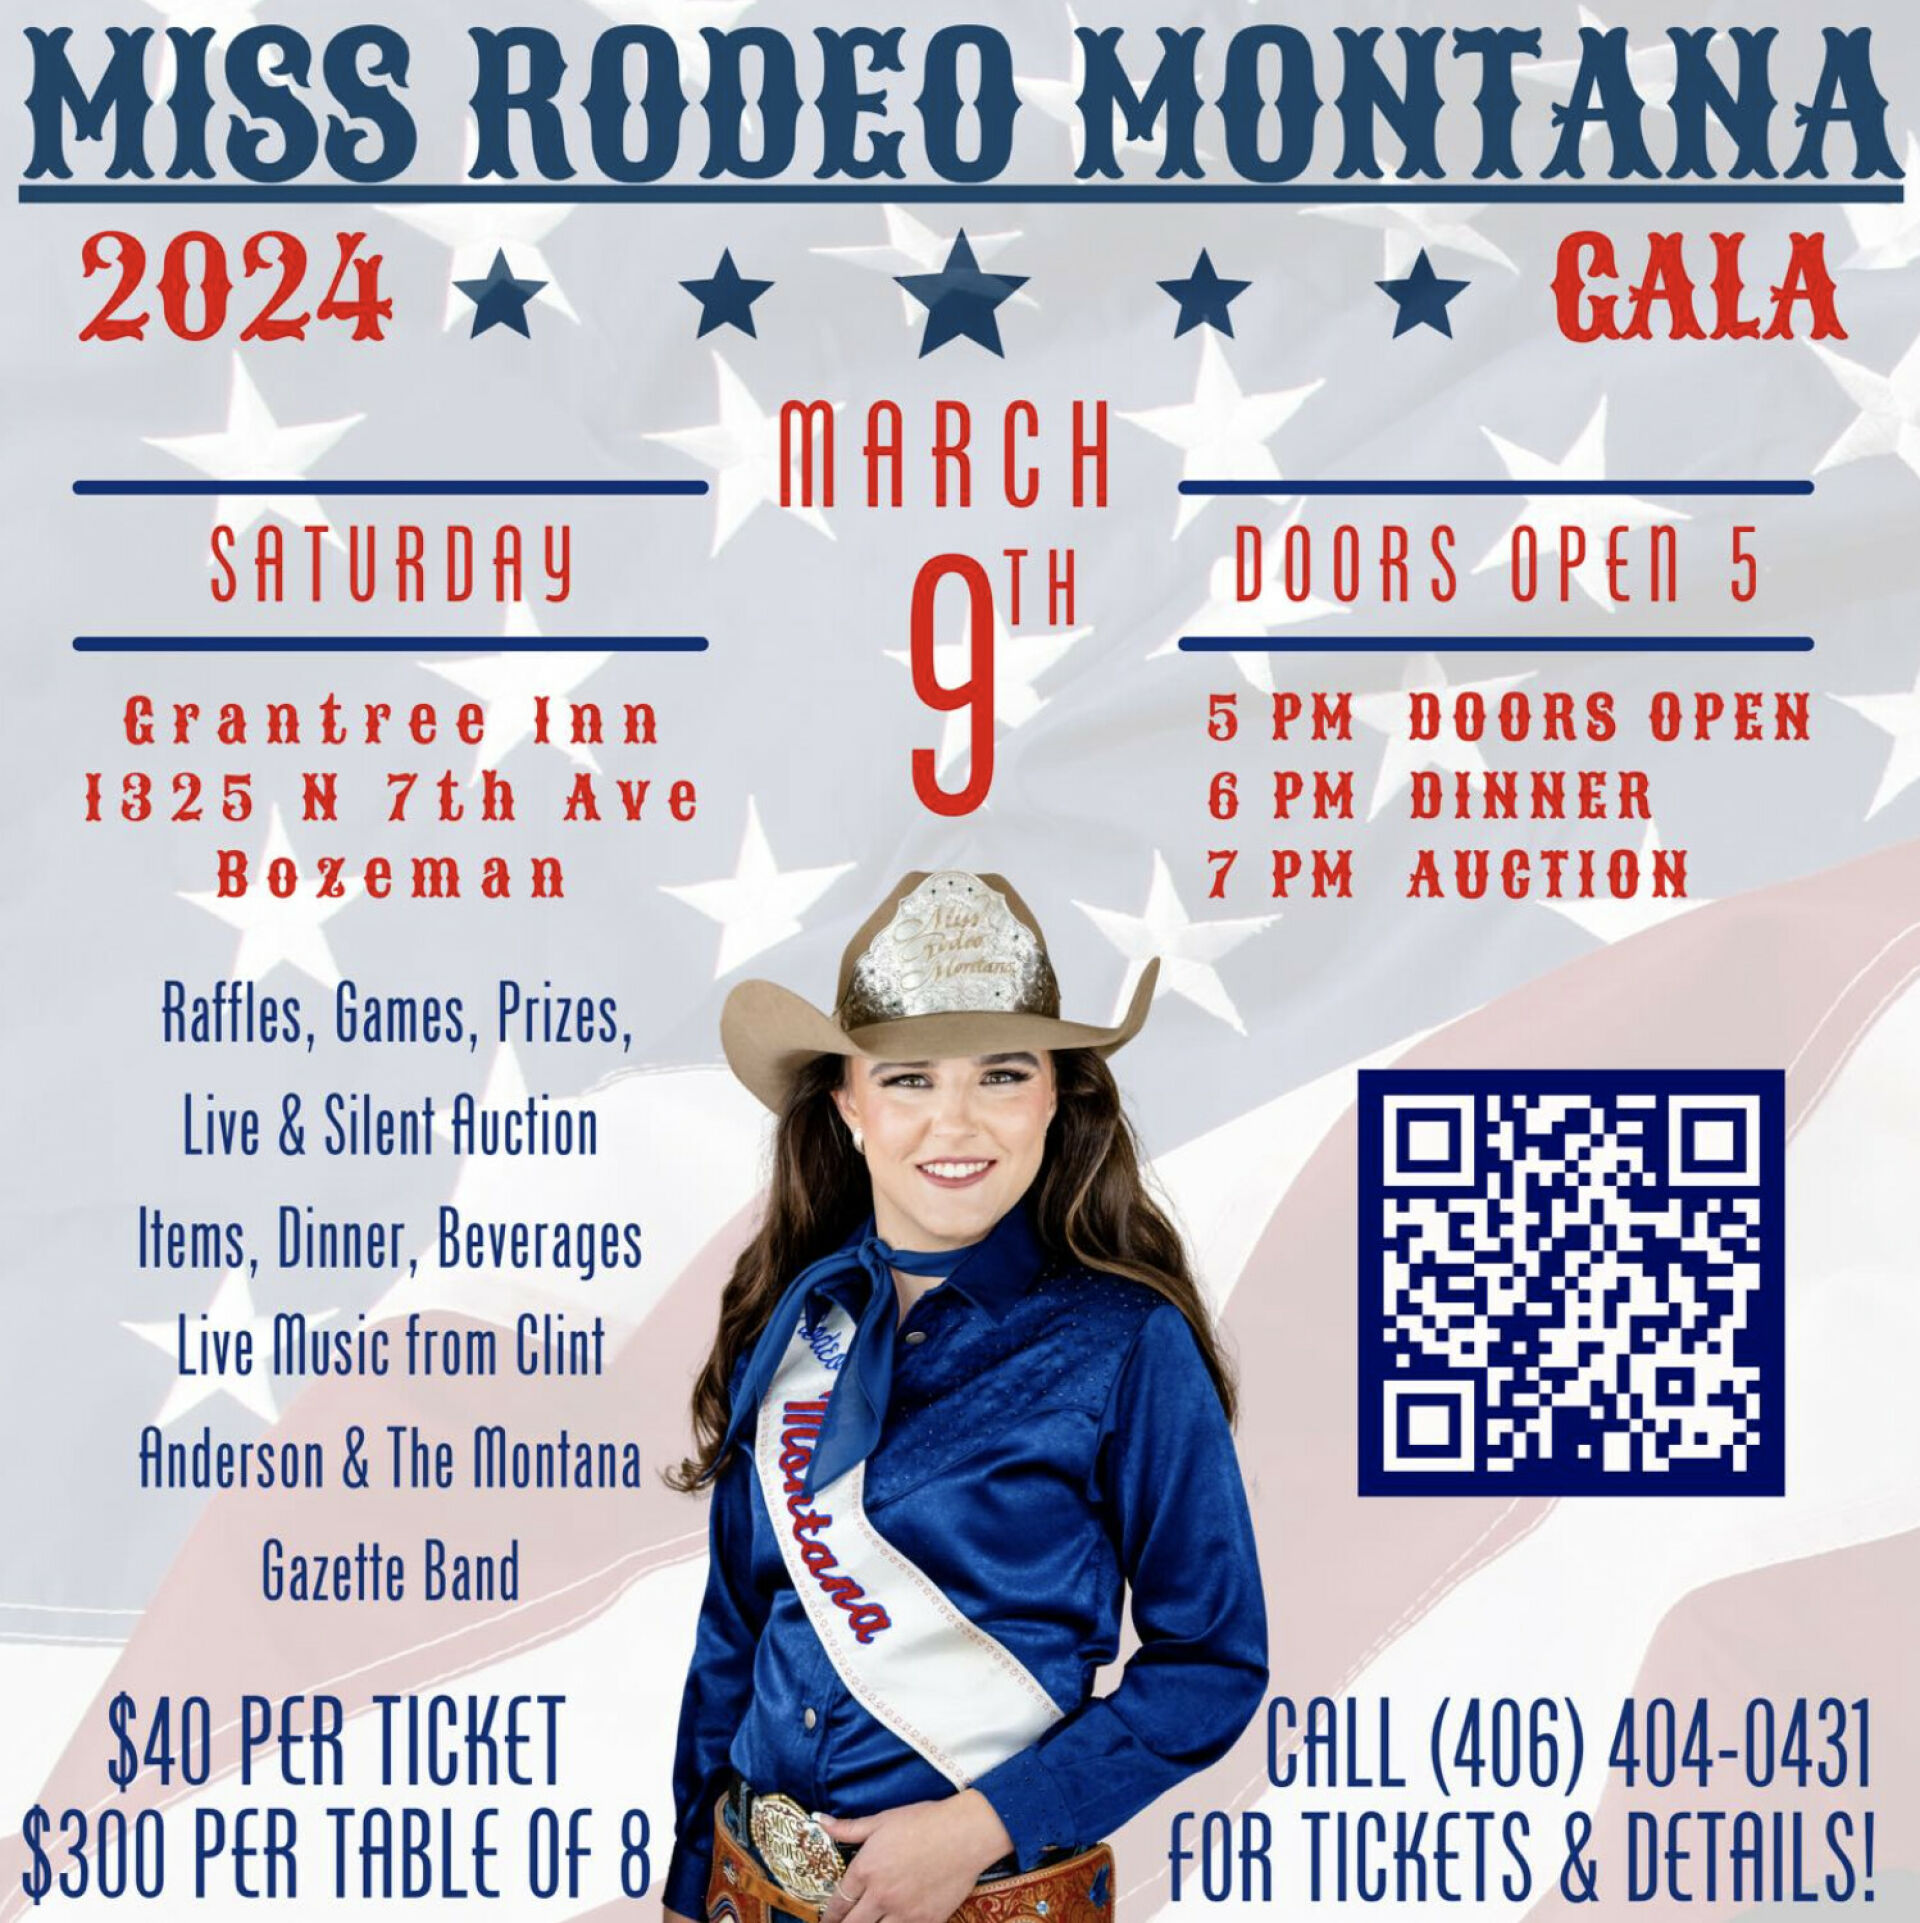 Miss Rodeo Montana 2024 Gala - Best Western Grantree Inn